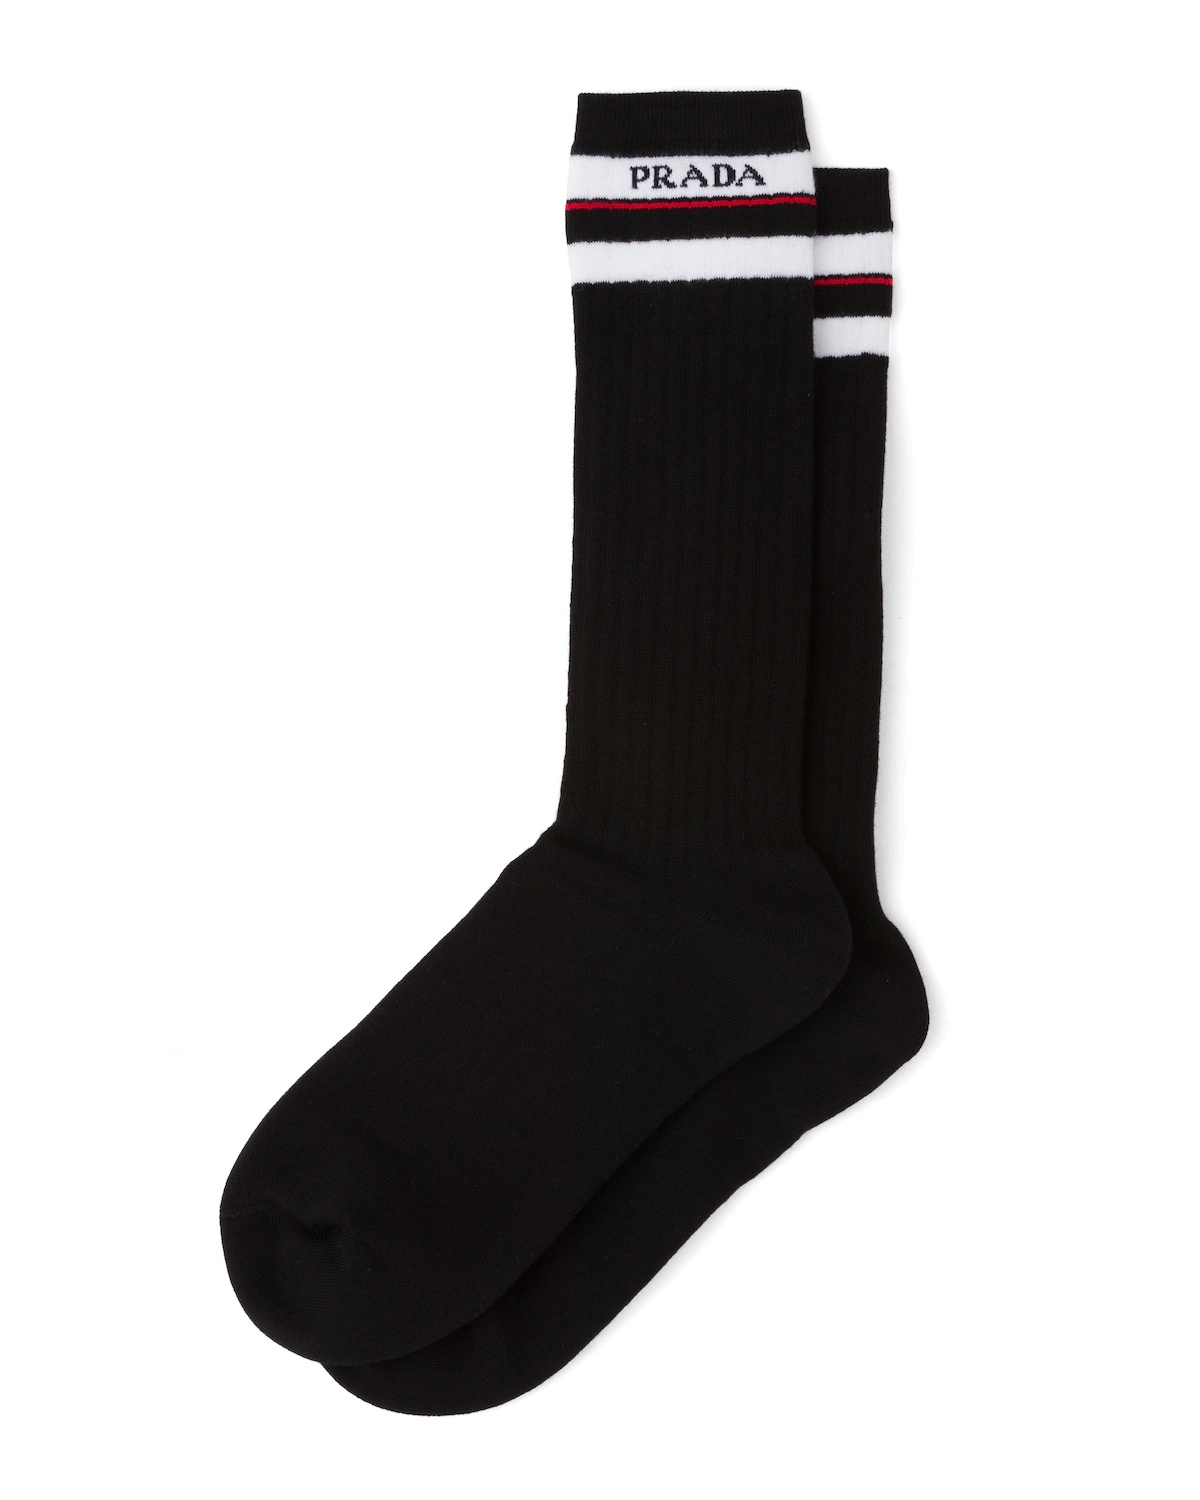 Cotton ankle socks - 1